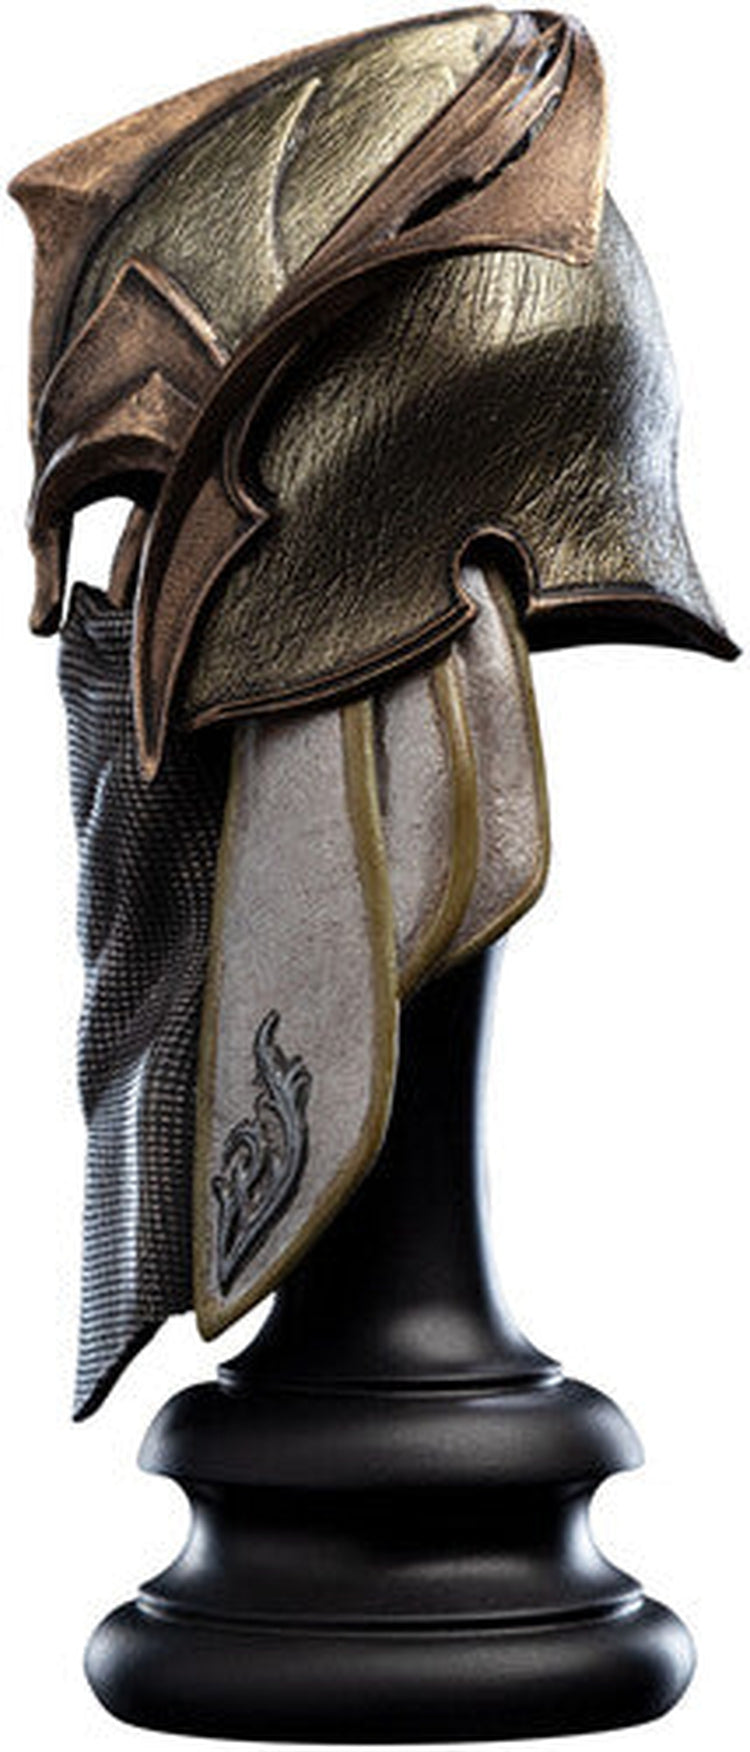 WETA Workshop Mini Prop Replica -The Hobbit Trilogy - Mirkwood Palace Guard Helm 1:4 Scale Helmet